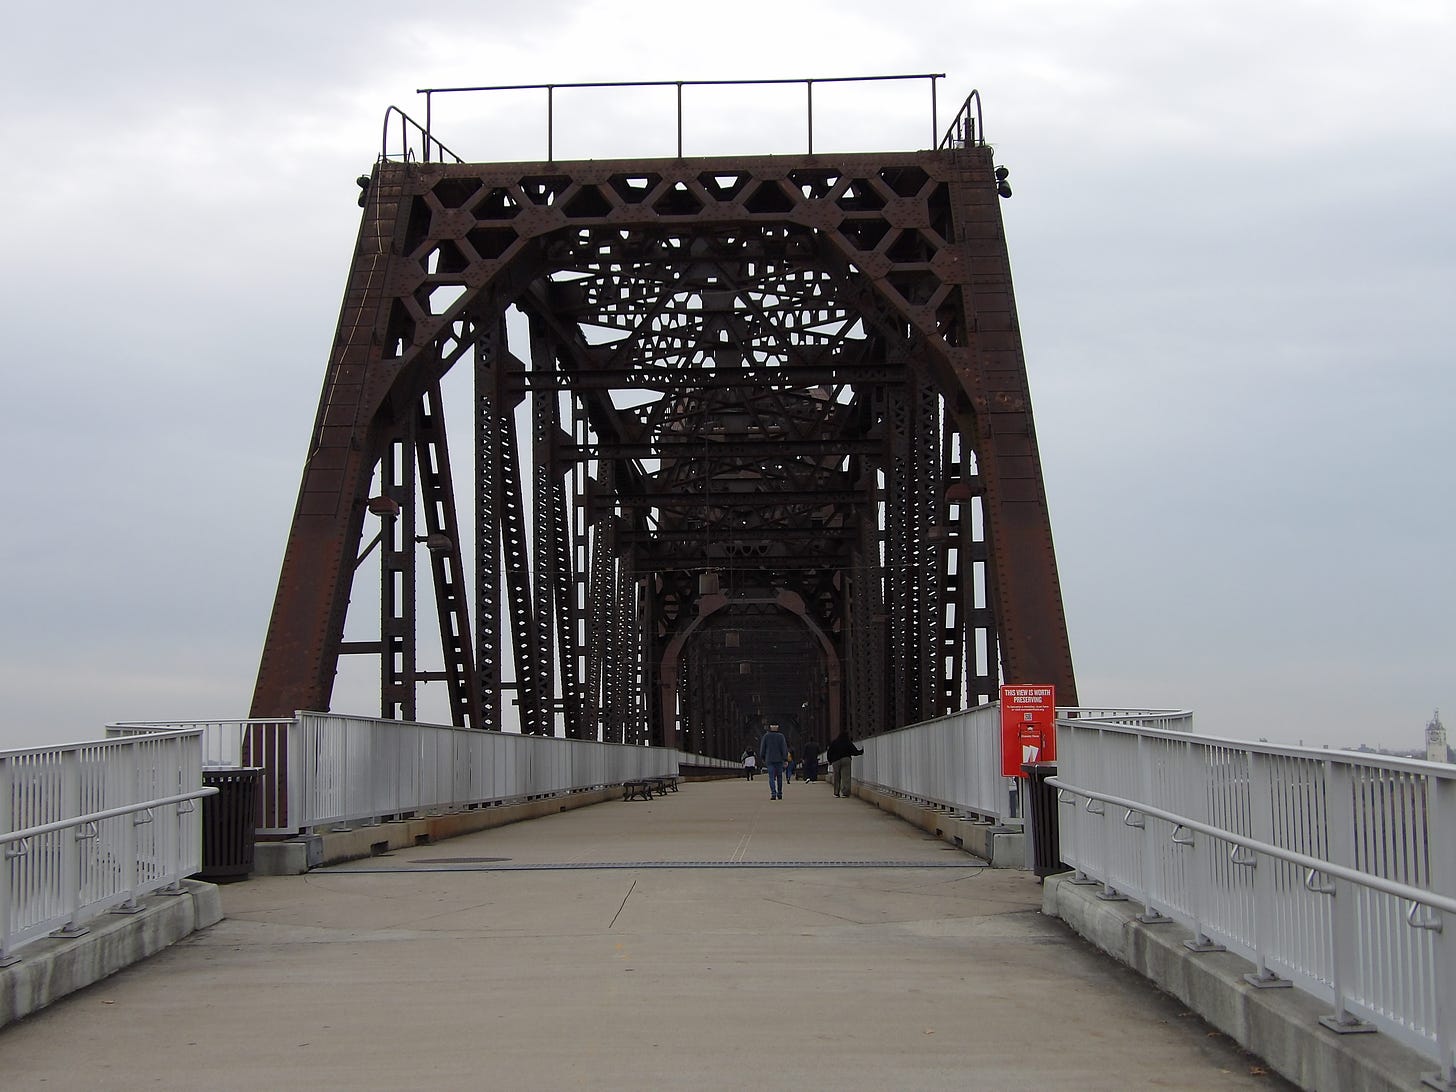 Big Four Railroad Bridge